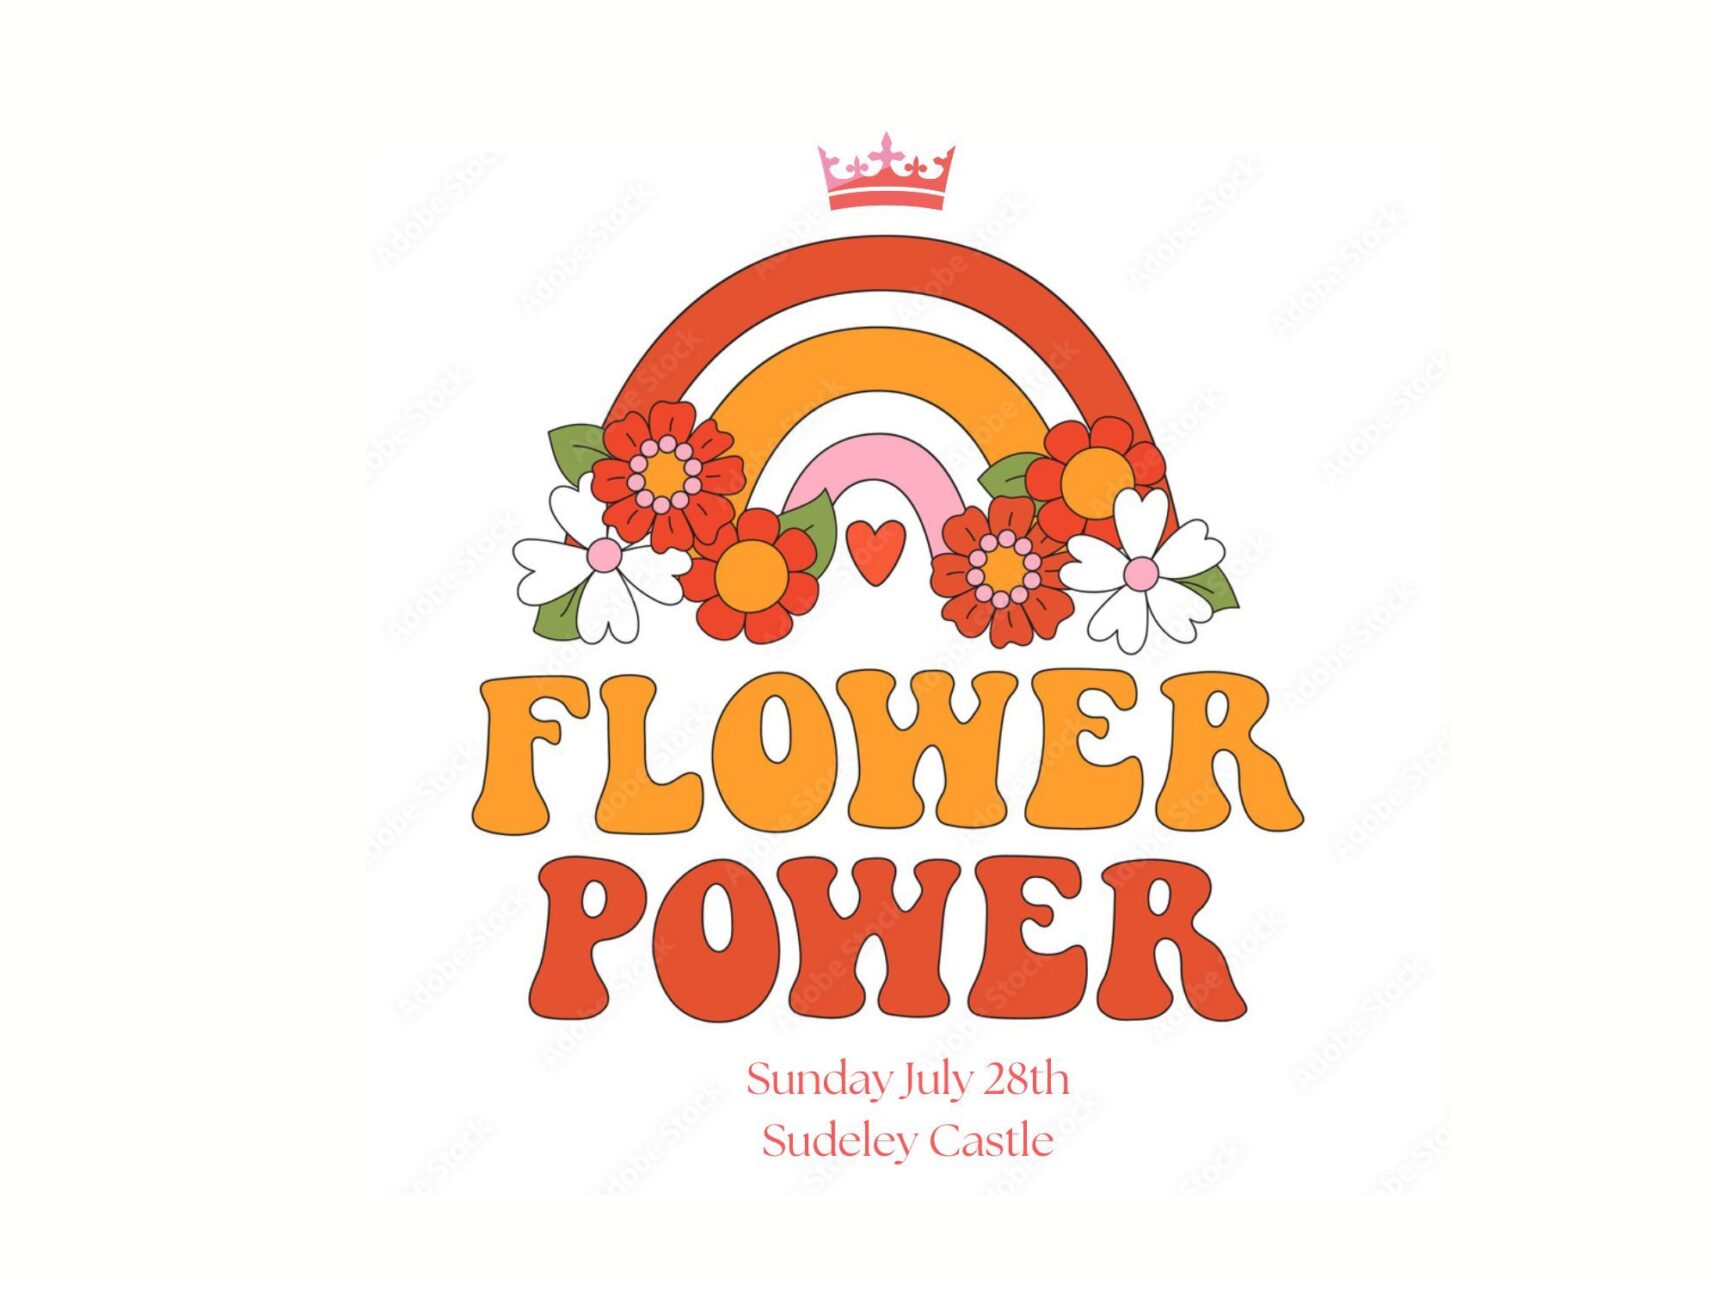 Flower Power at Sudeley Castle